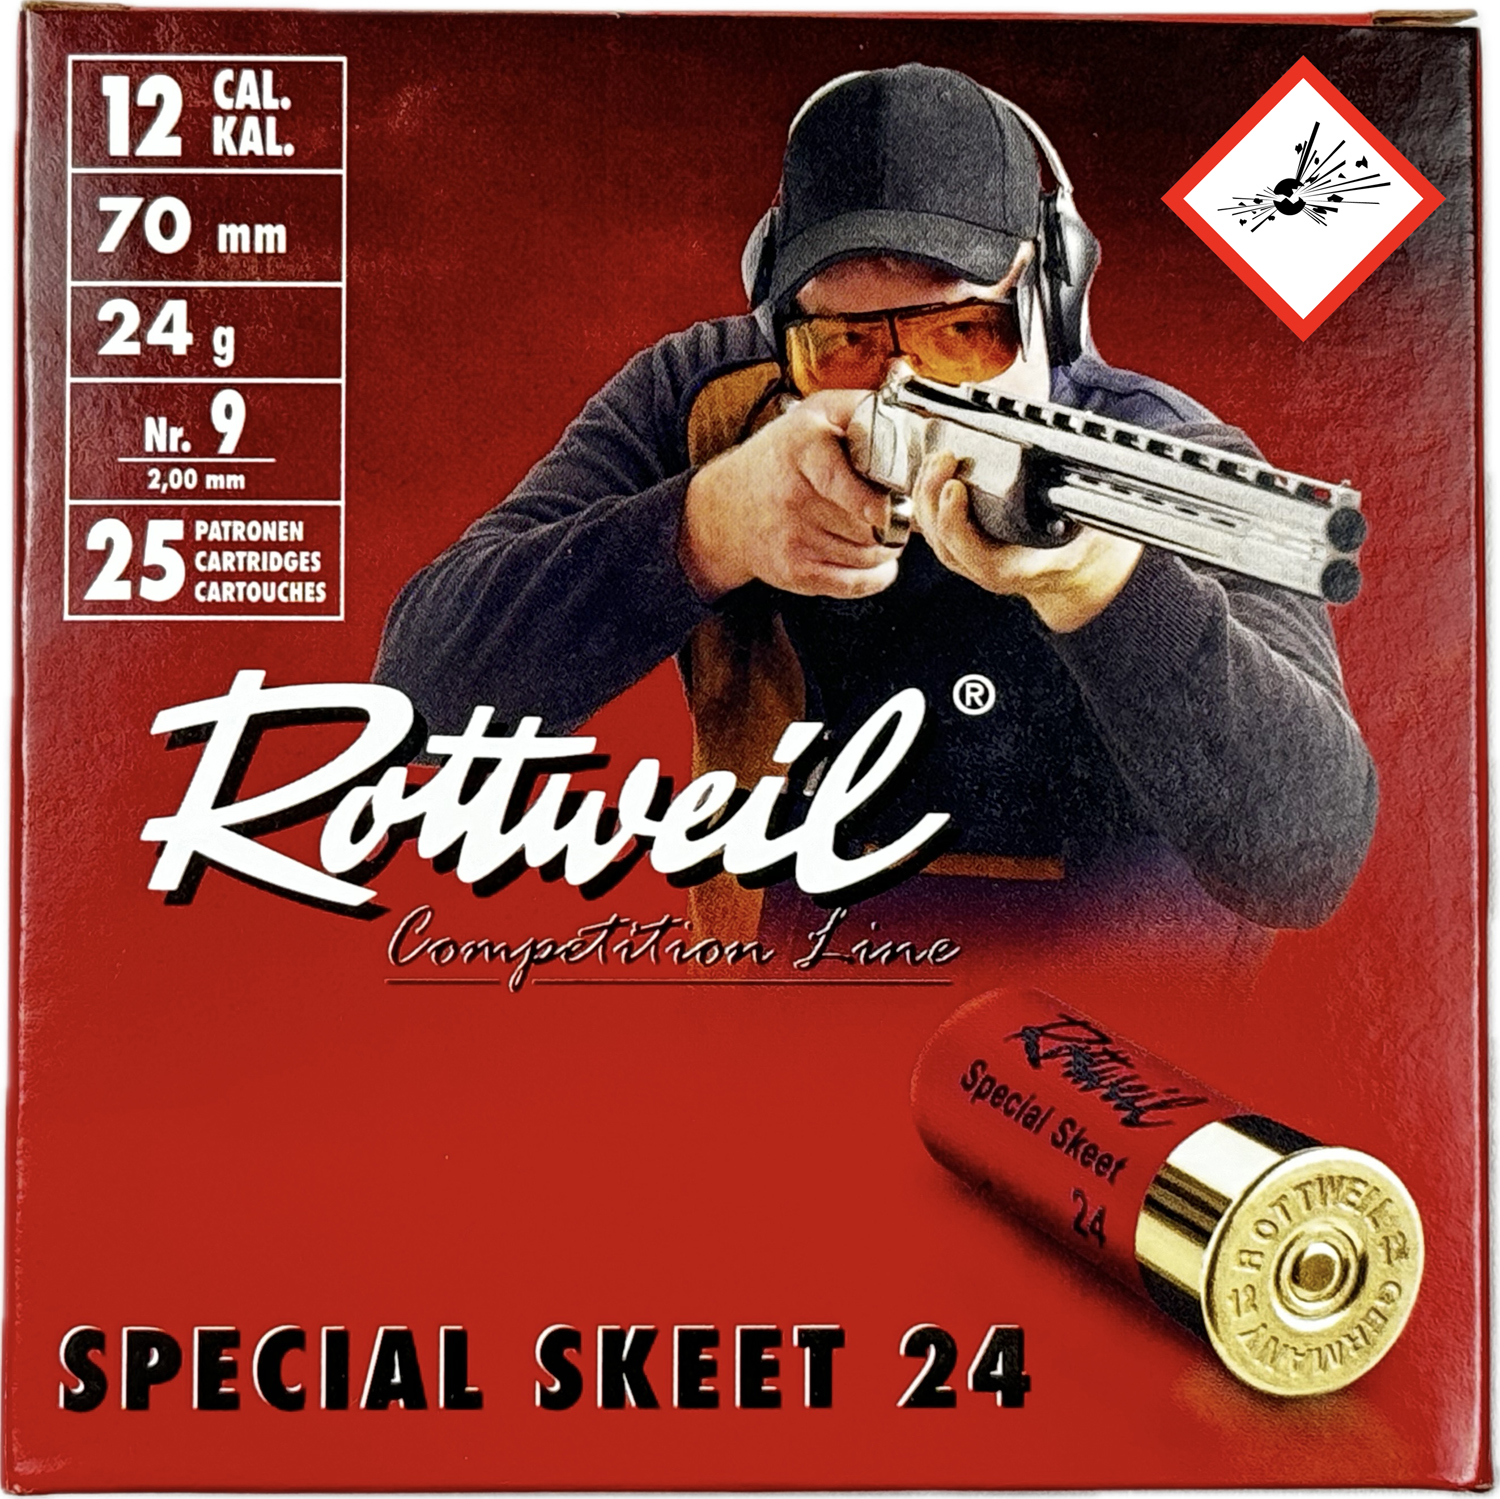 201606_rottweil-special-skeet-12-70-24g-2,0mm